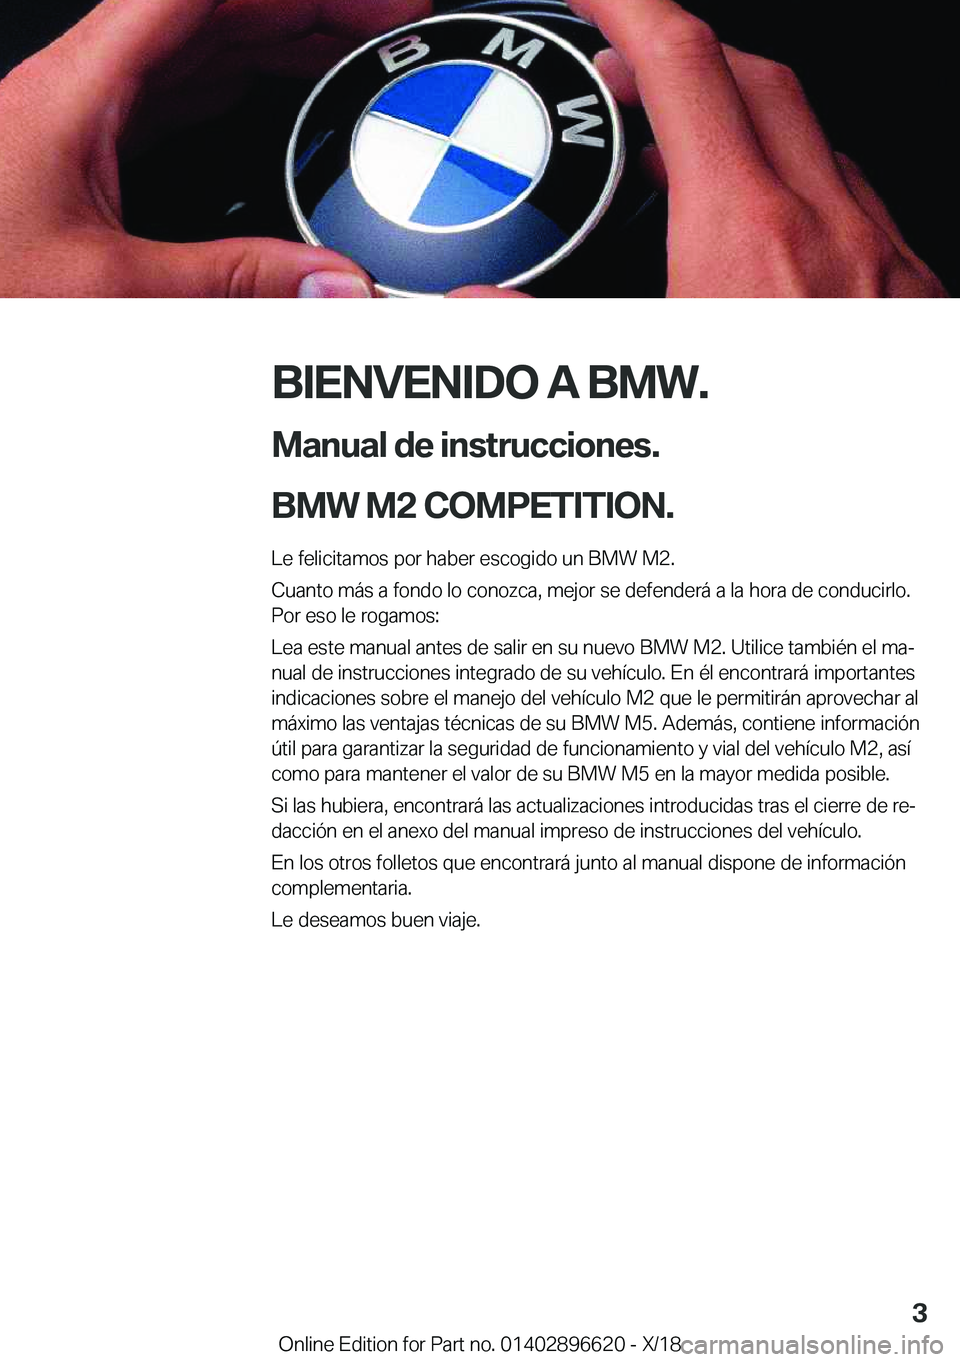 BMW M2 2019  Manuales de Empleo (in Spanish) �B�I�E�N�V�E�N�I�D�O��A��B�M�W�.
�M�a�n�u�a�l��d�e��i�n�s�t�r�u�c�c�i�o�n�e�s�.
�B�M�W��M�2��C�O�M�P�E�T�I�T�I�O�N�.� �L�e��f�e�l�i�c�i�t�a�m�o�s��p�o�r��h�a�b�e�r��e�s�c�o�g�i�d�o��u�n��